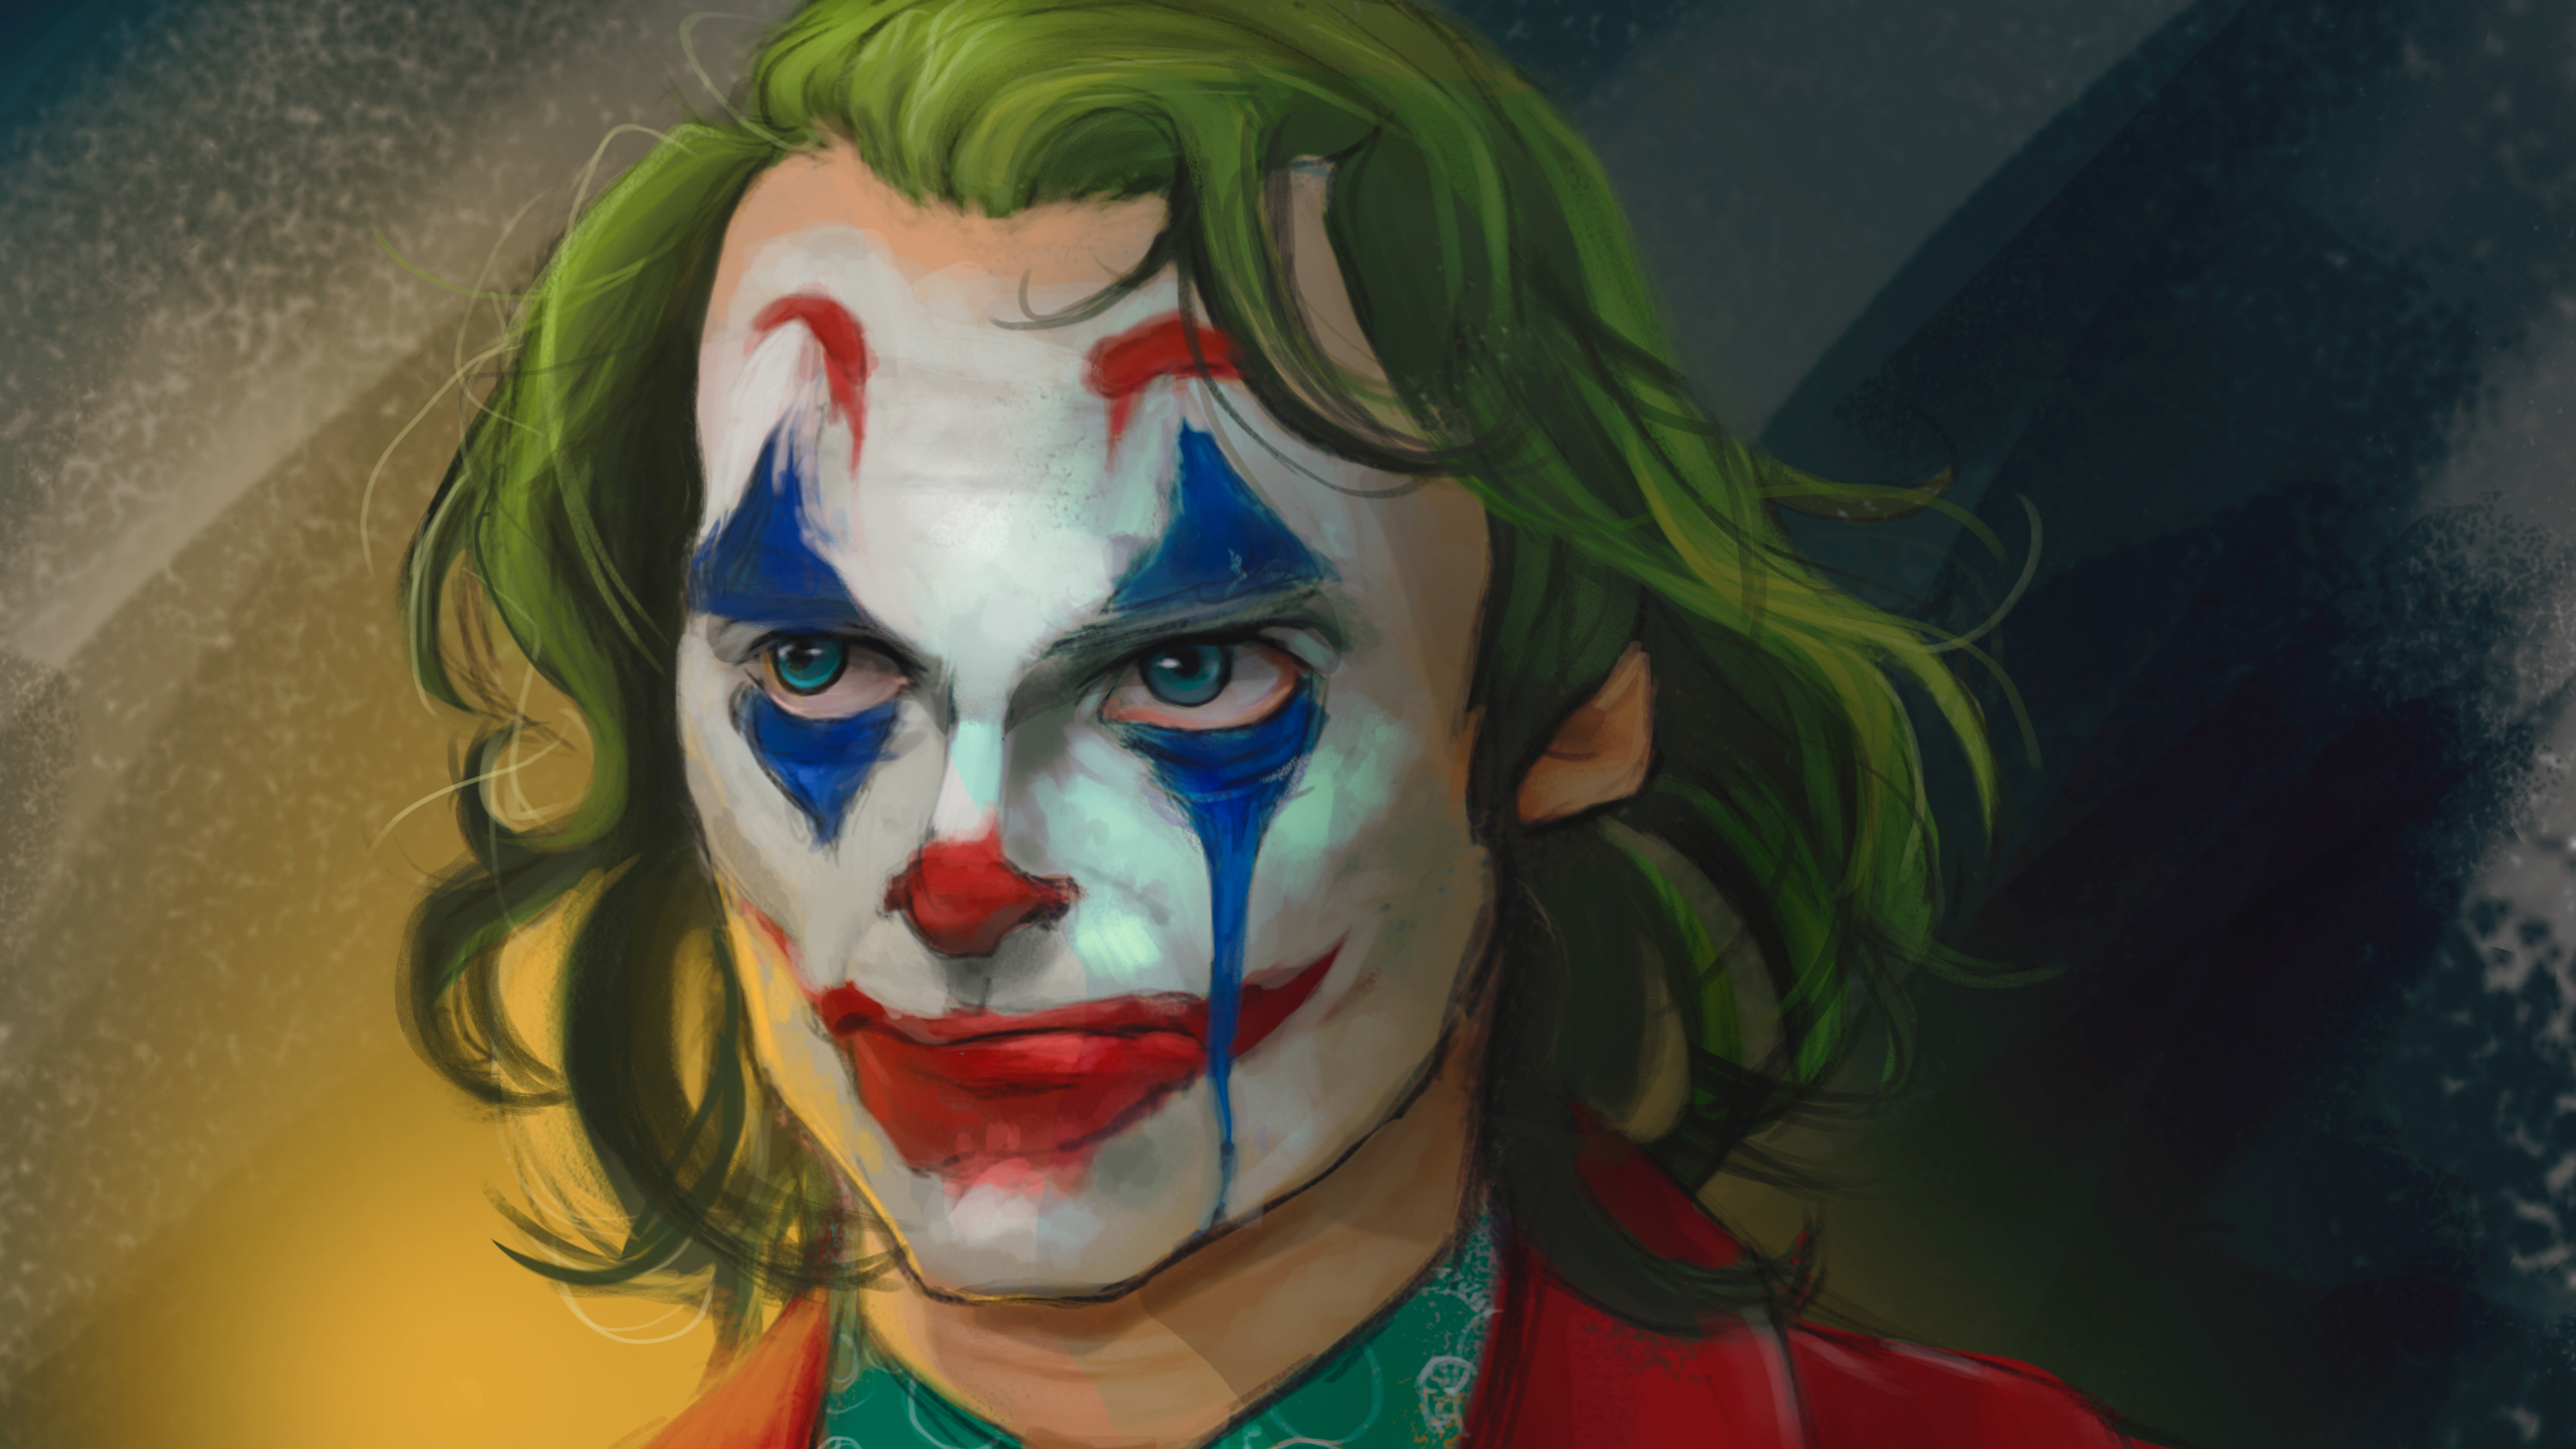 The Joker Joaquin Phoenix Art, HD Superheroes, 4k Wallpaper, Image